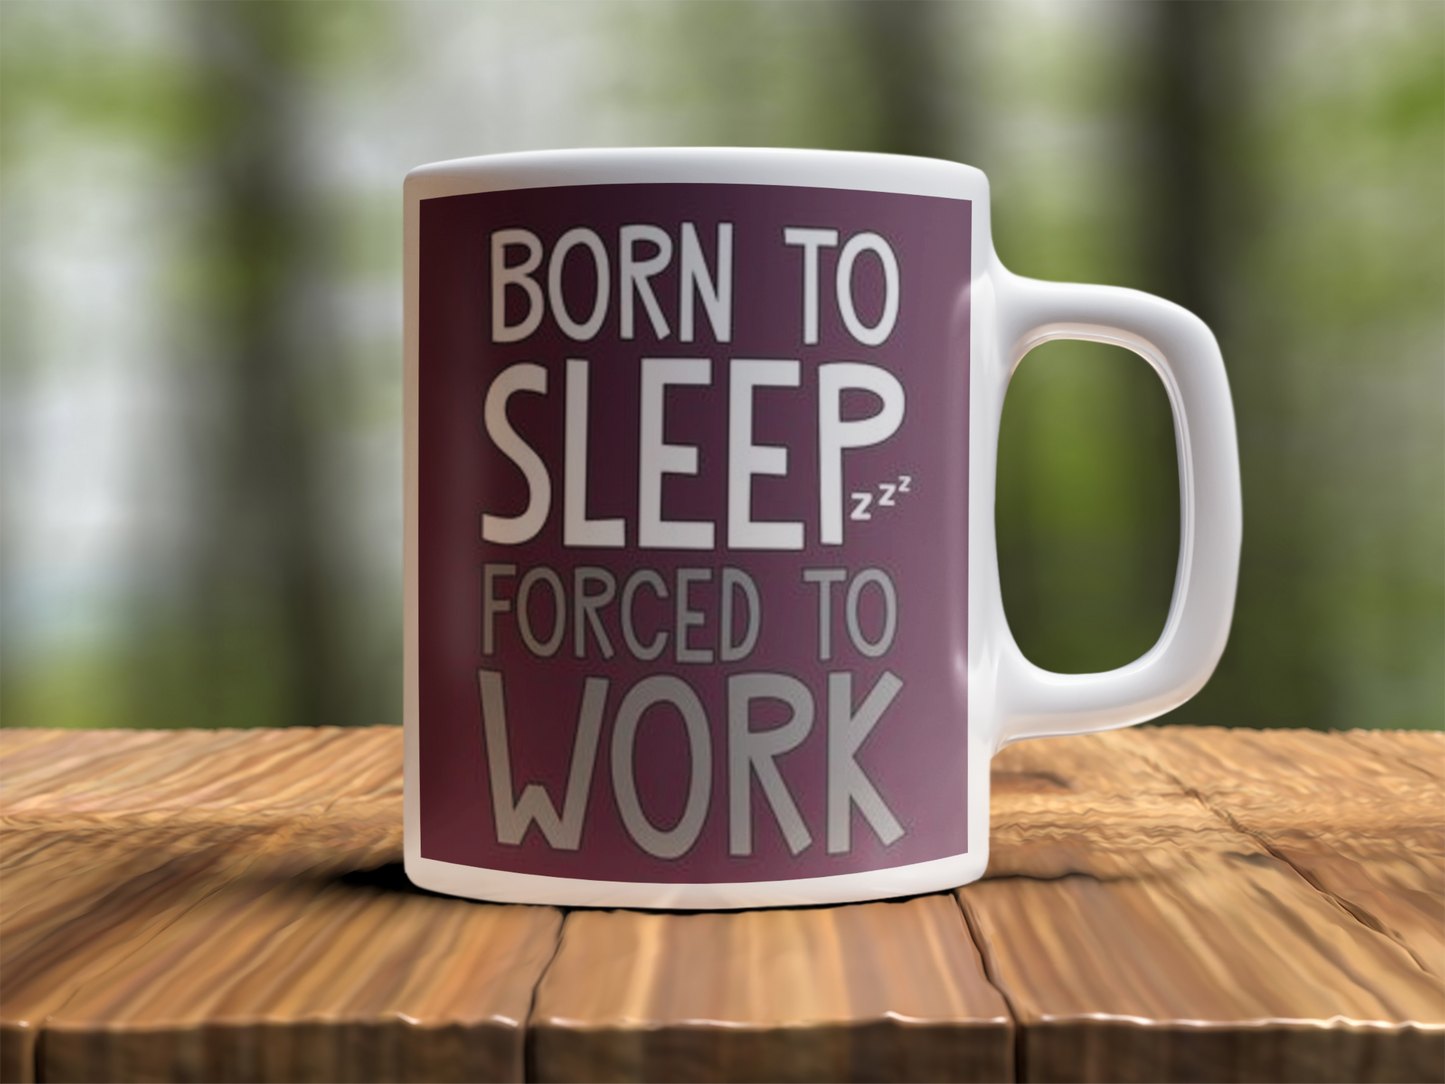 Born to sleep forced to work Design Photo Mug Printing